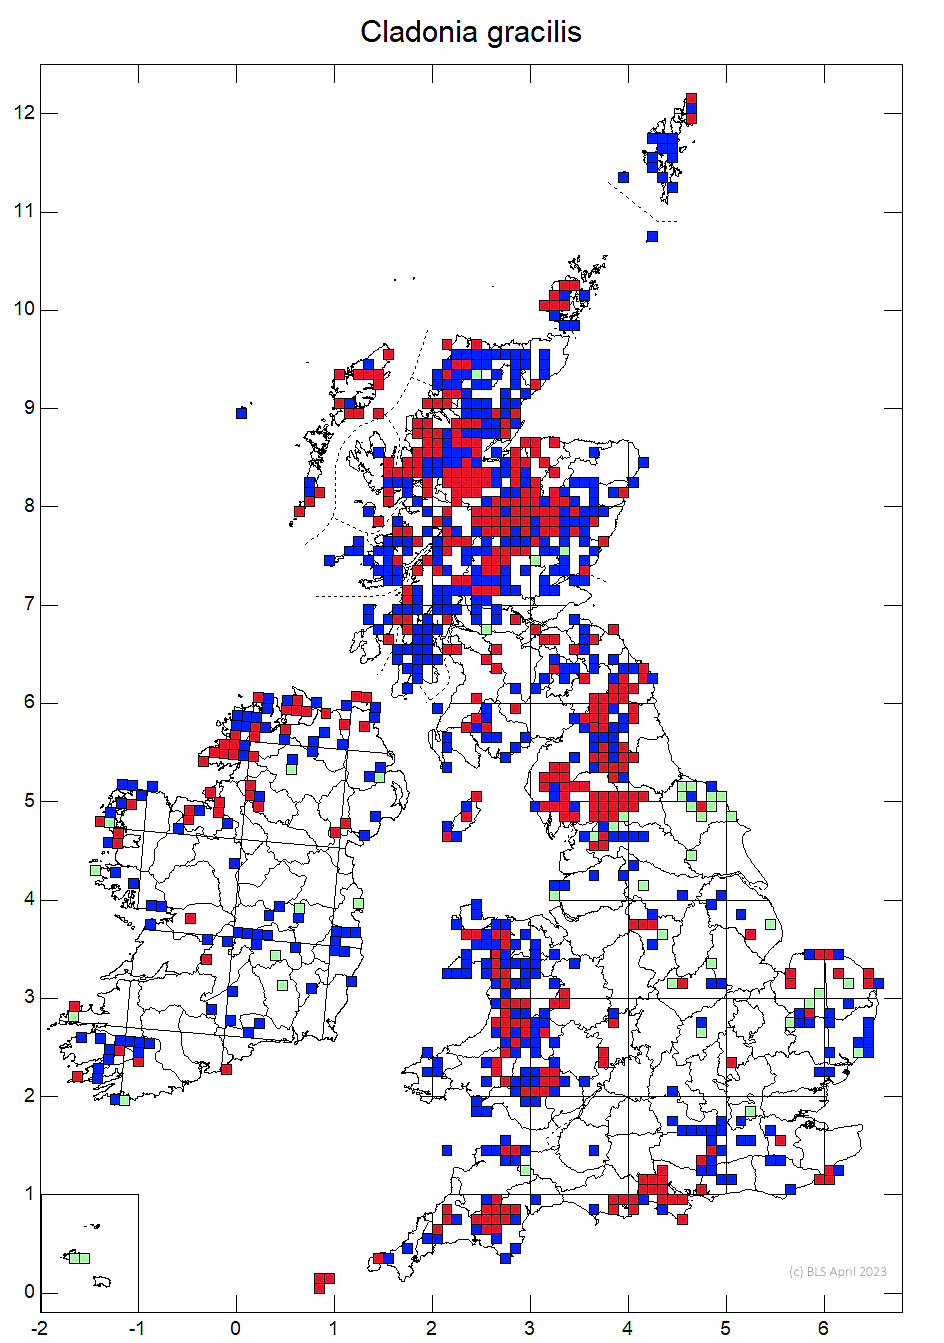 Cladonia gracilis 10km sq distribution map